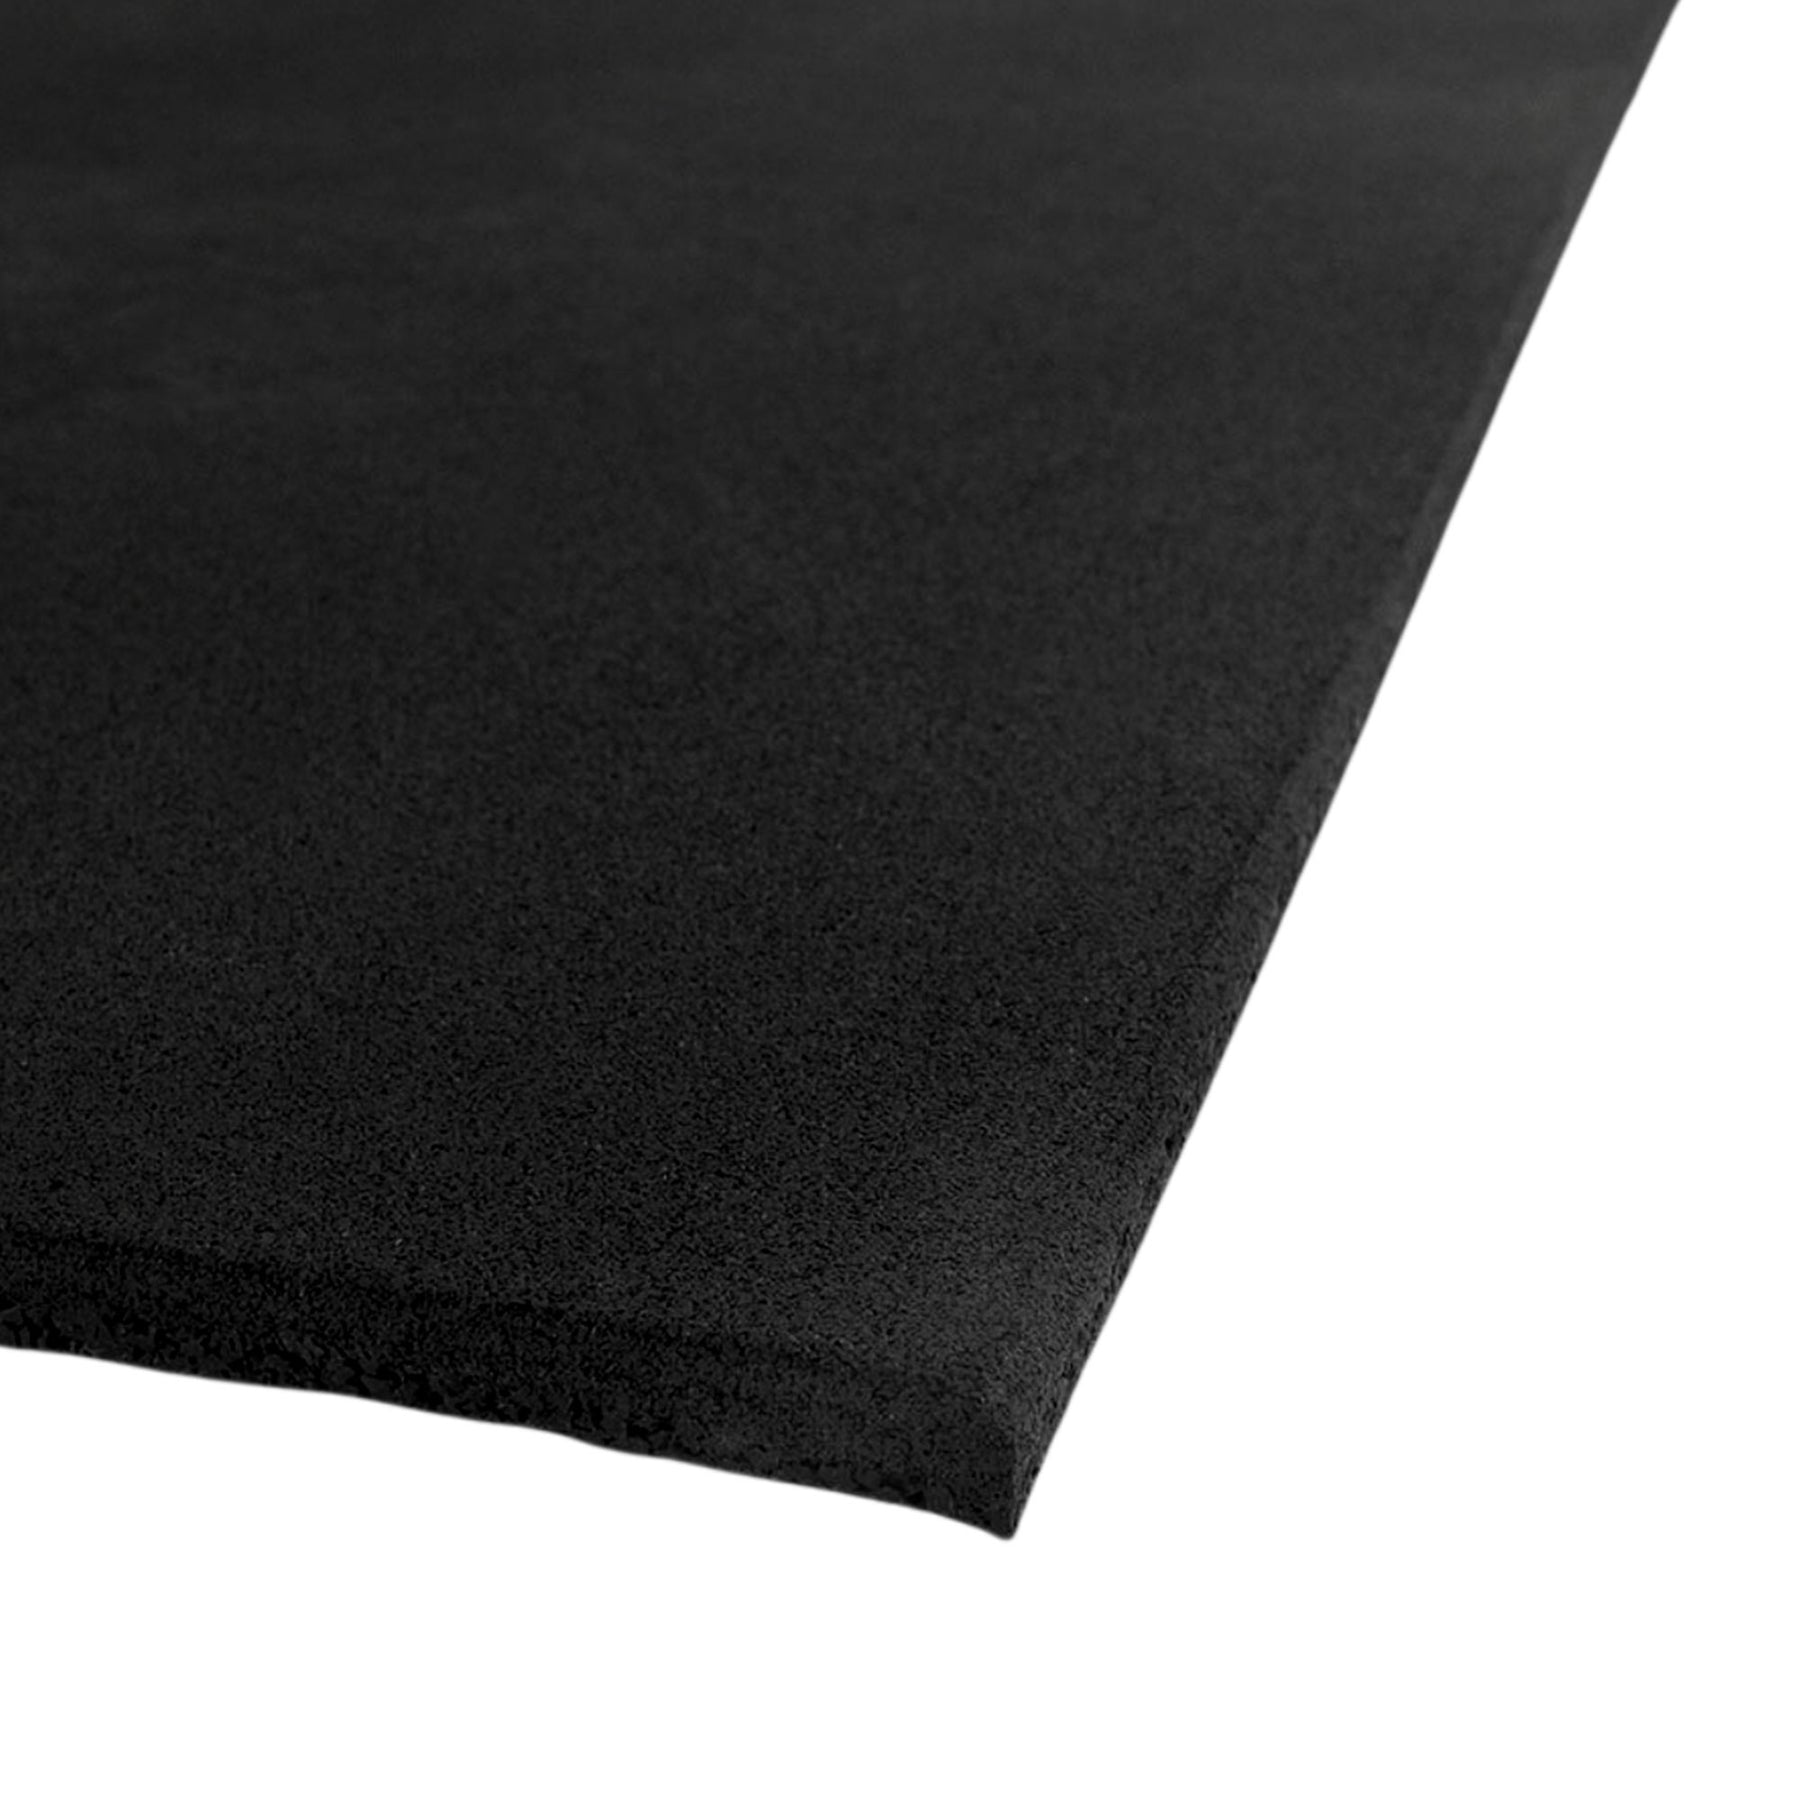 Rubber Gym Flooring Tile Plain Black